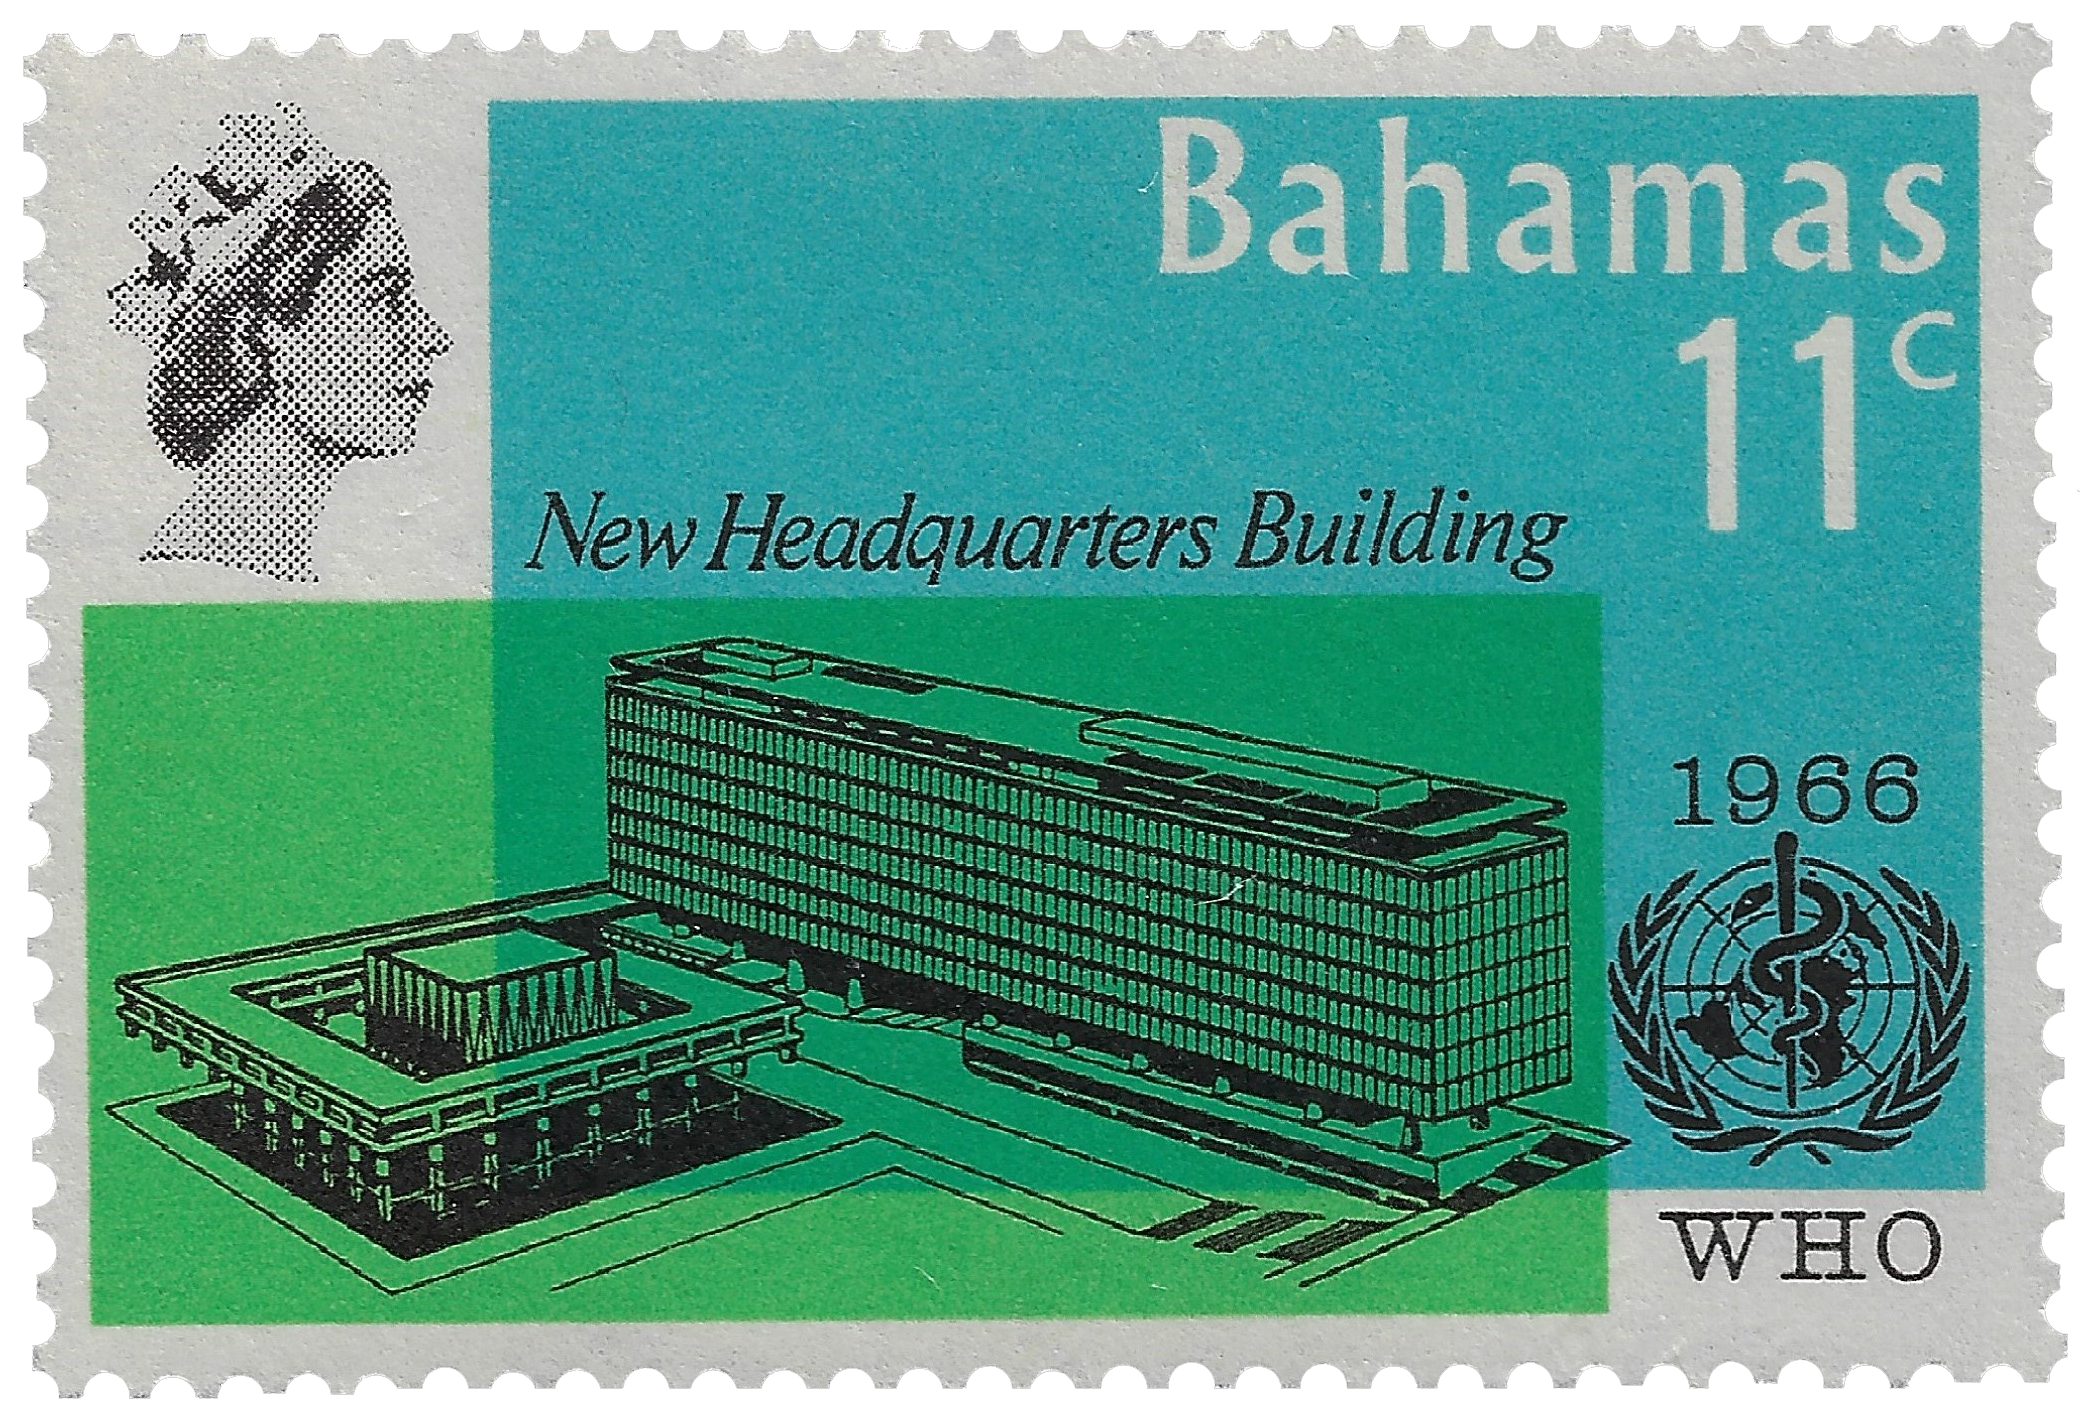 11c 1966, New Headquarters Building, WHO